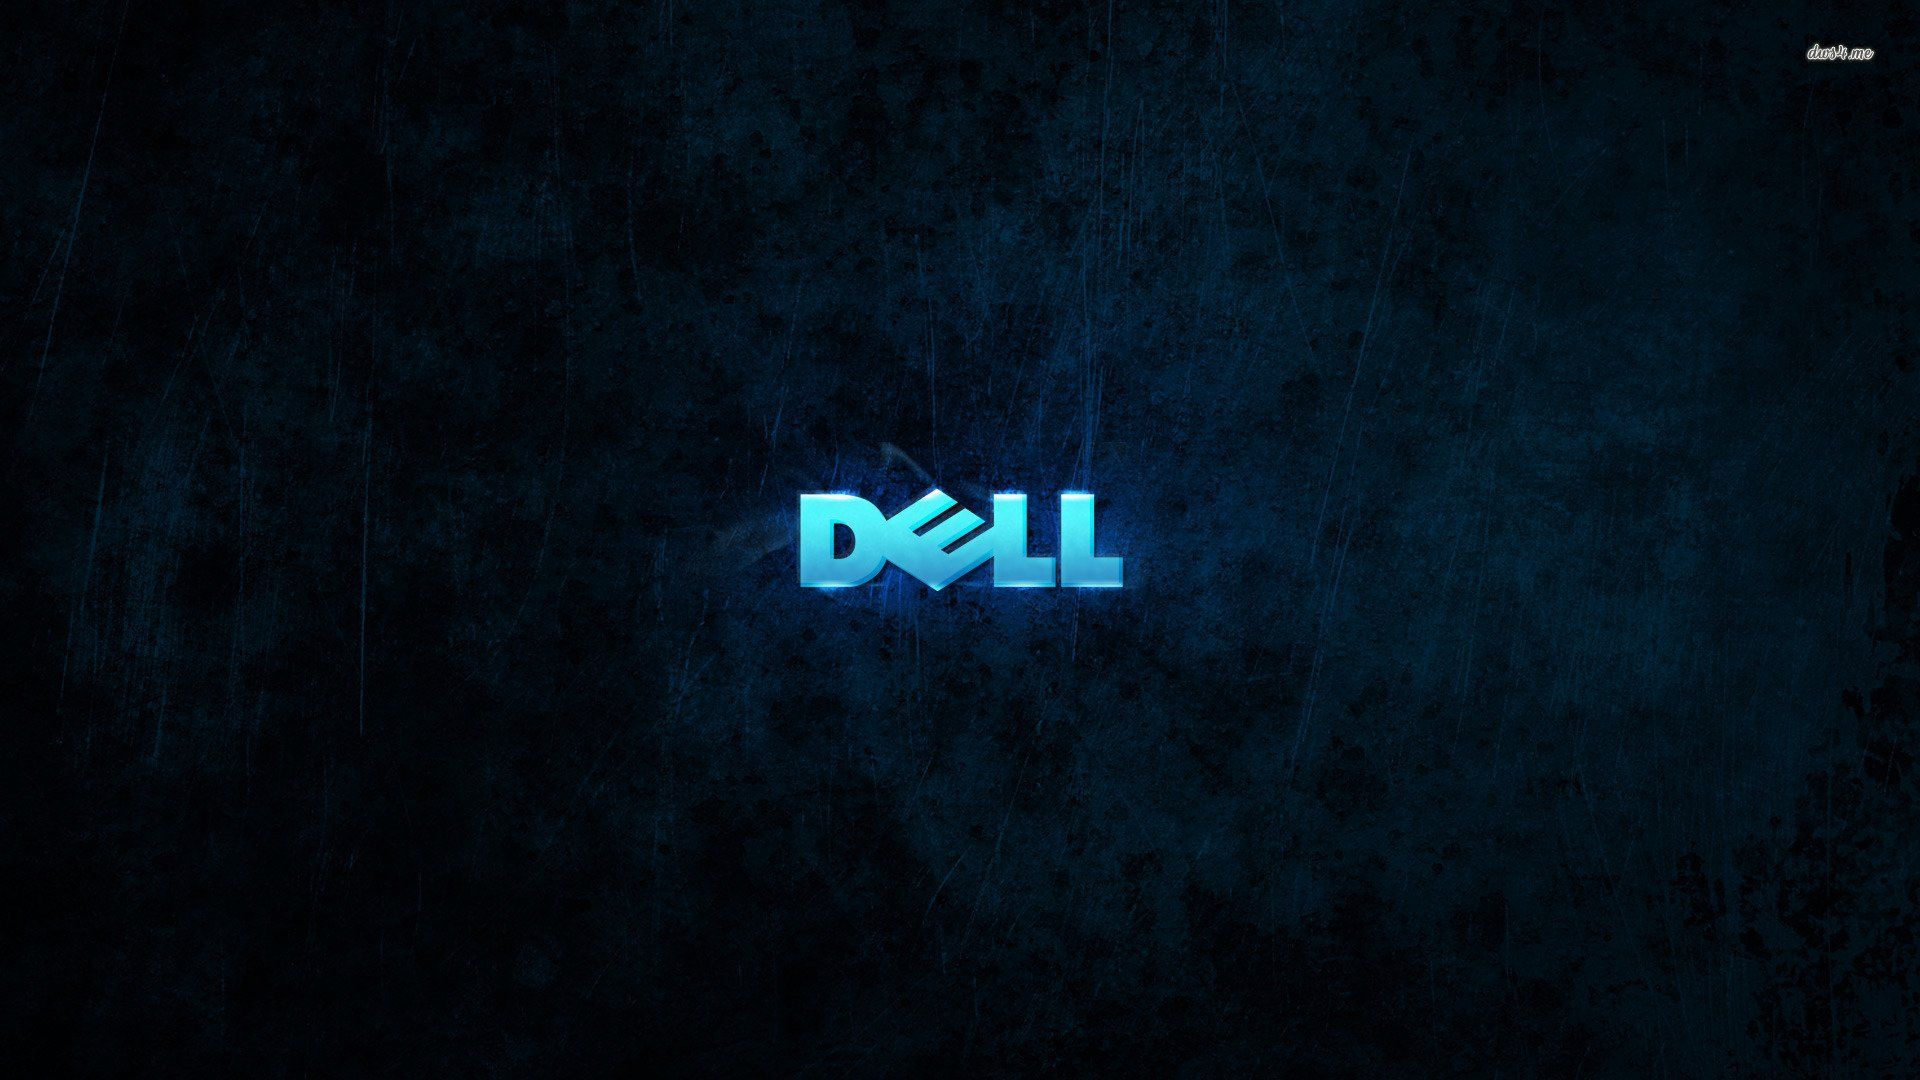 Dell G5 Wallpaper Free Dell G5 Background